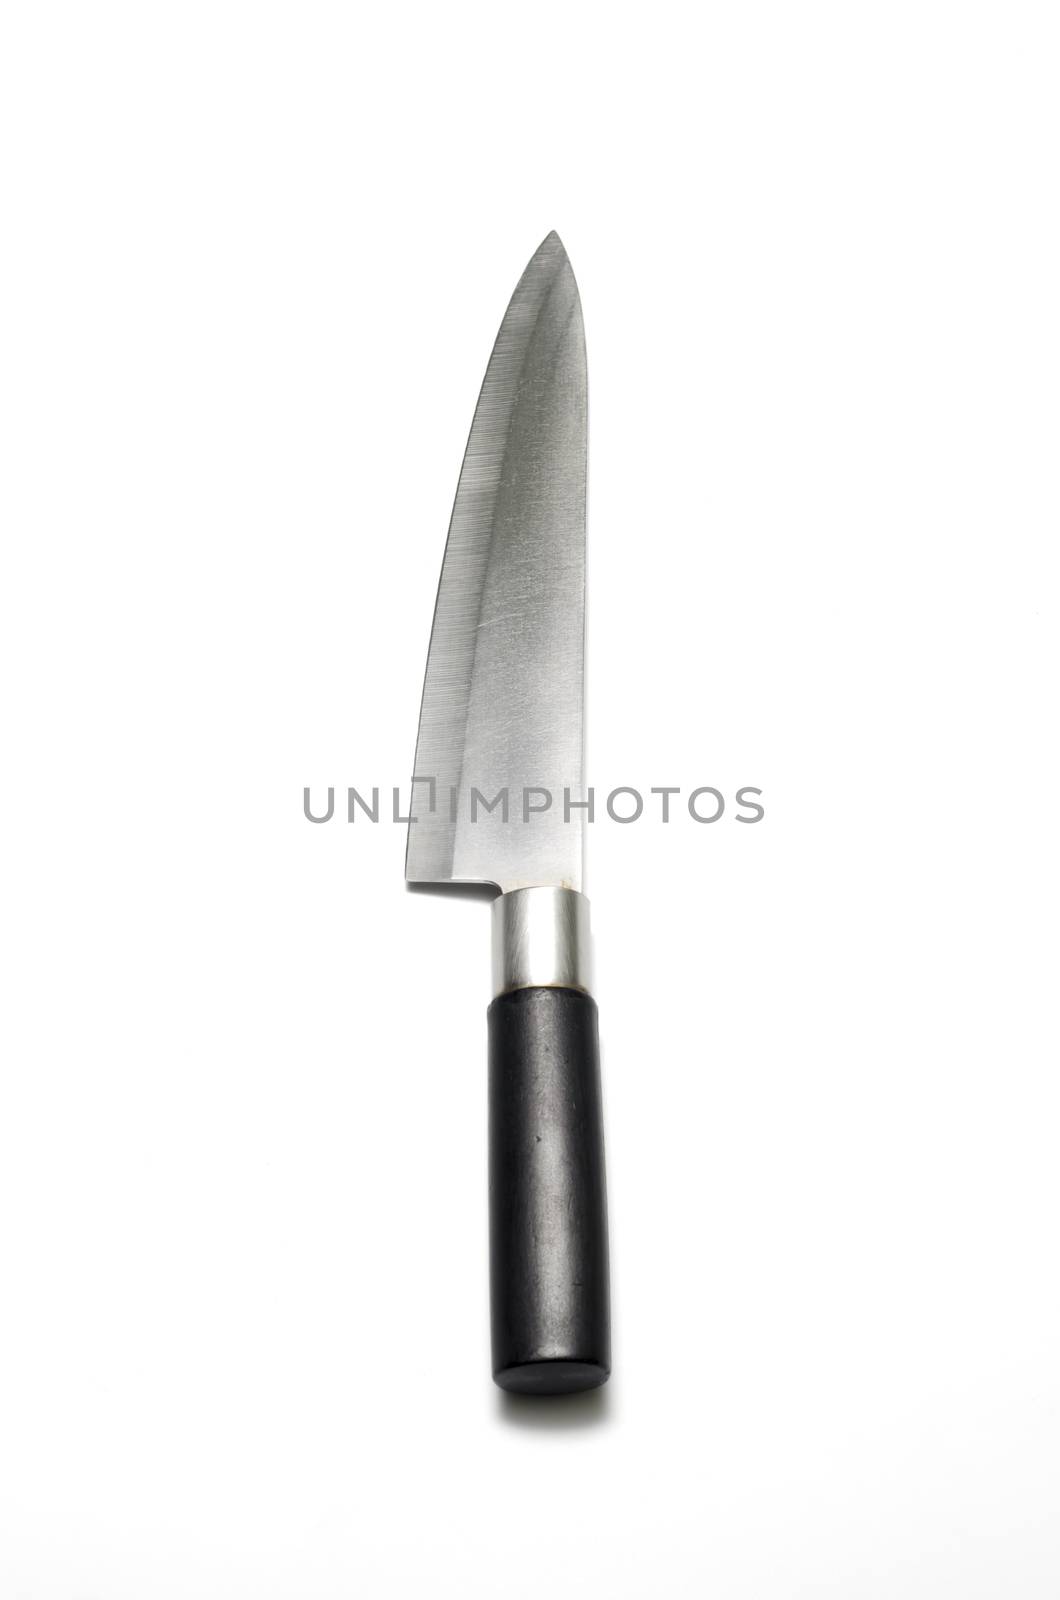 kitchen knife on a white background